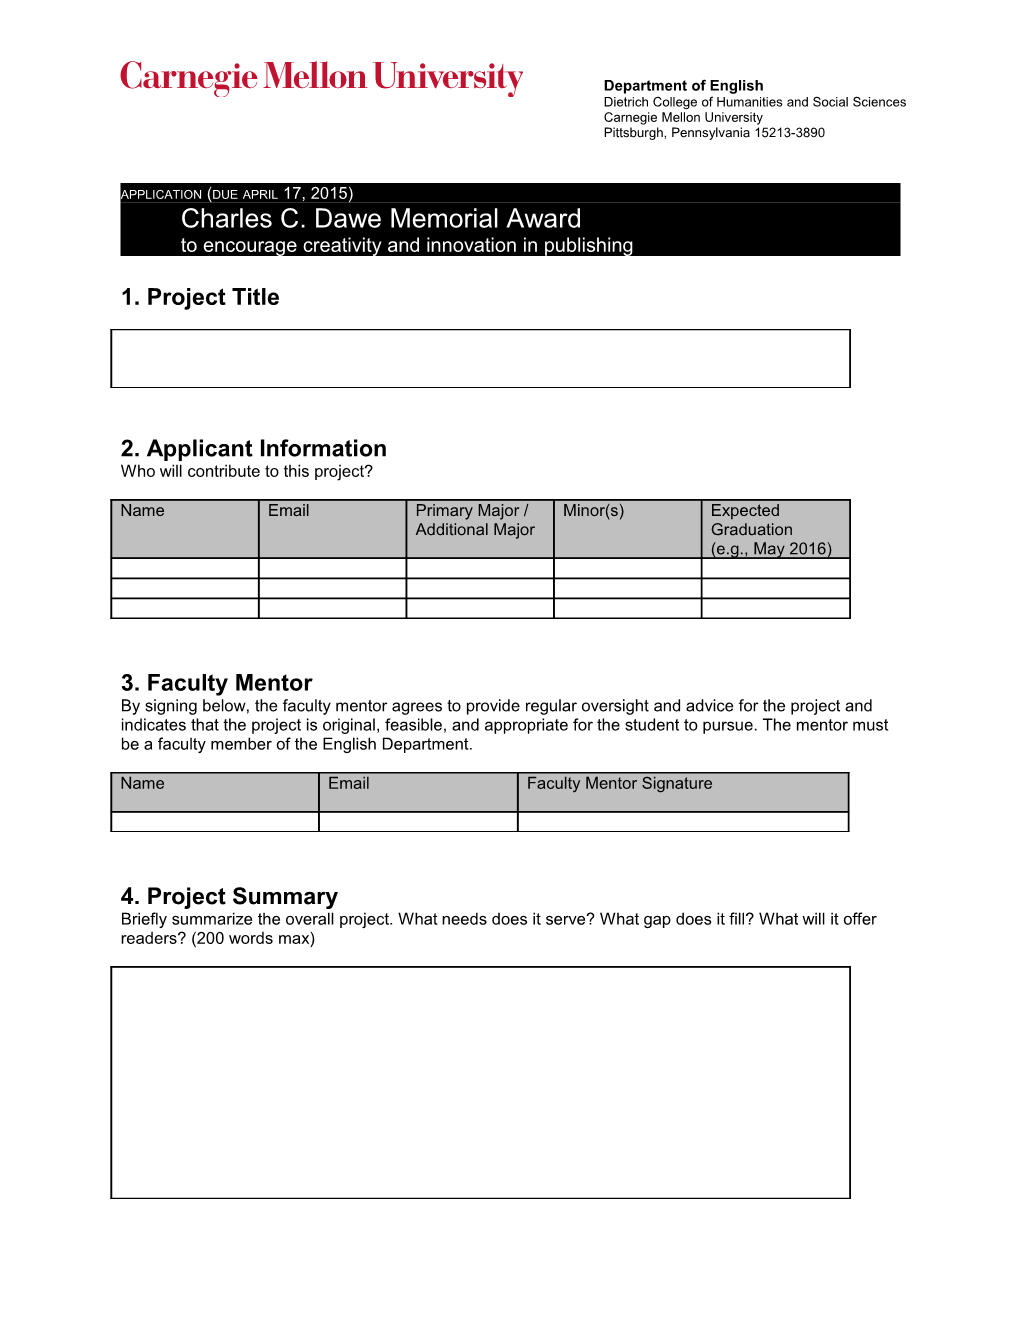 Application for the Charles C. Dawe Award